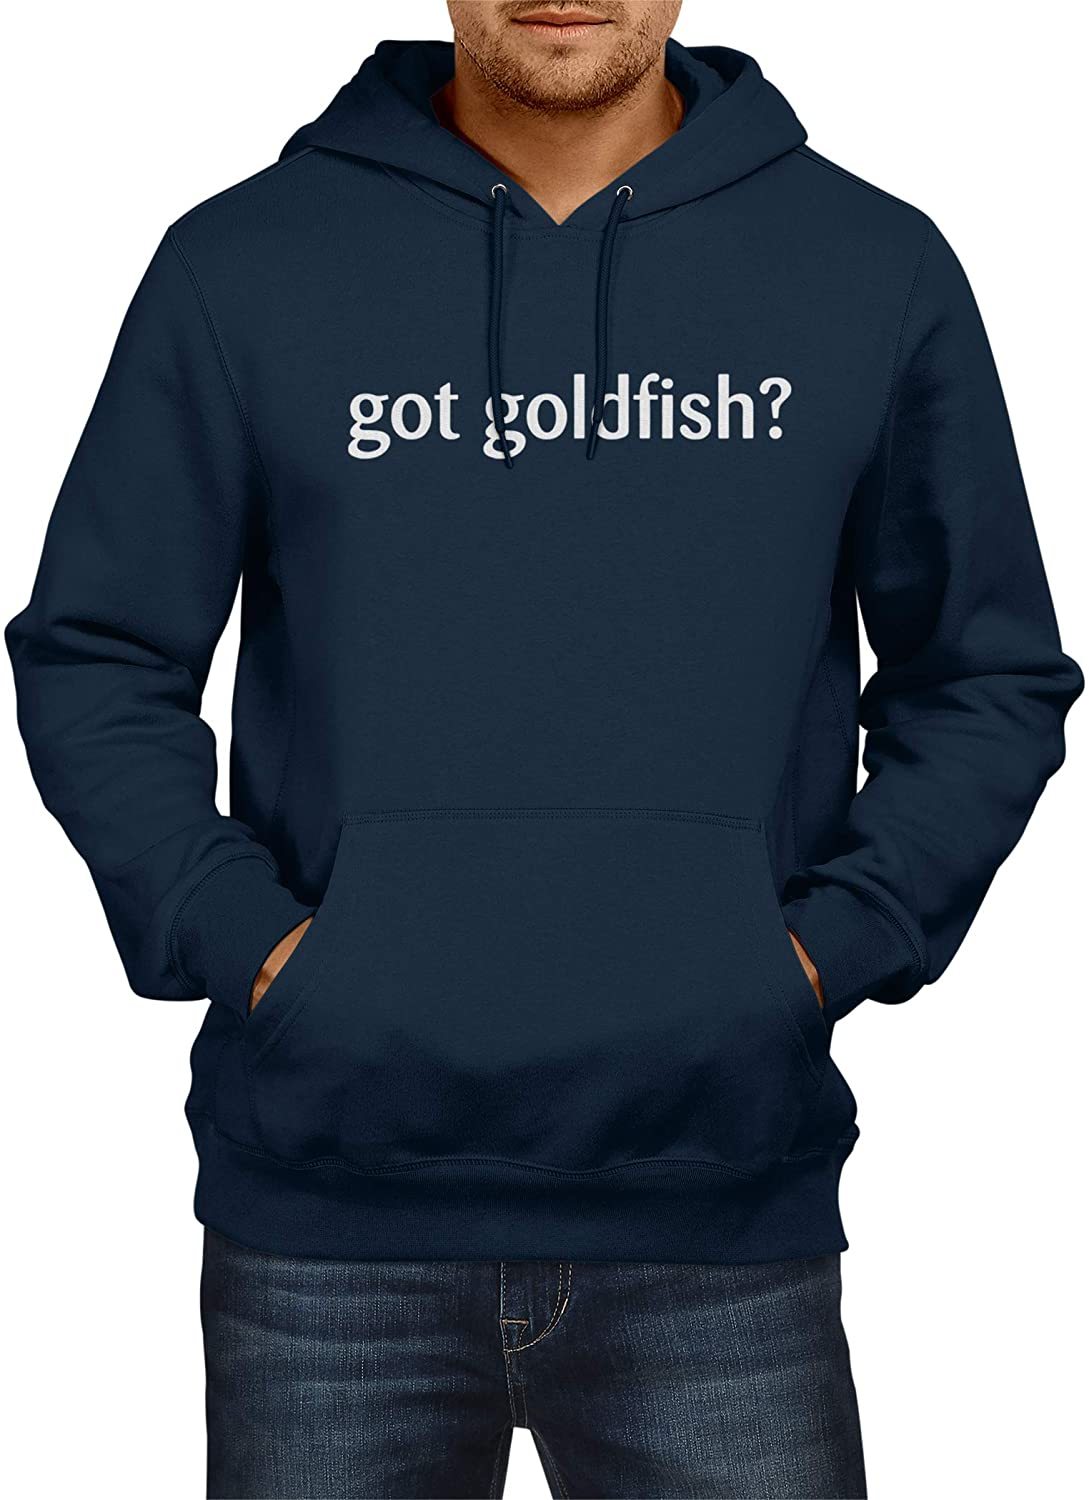 NXY Men's Got Goldfish Hoodie Sweatshirt